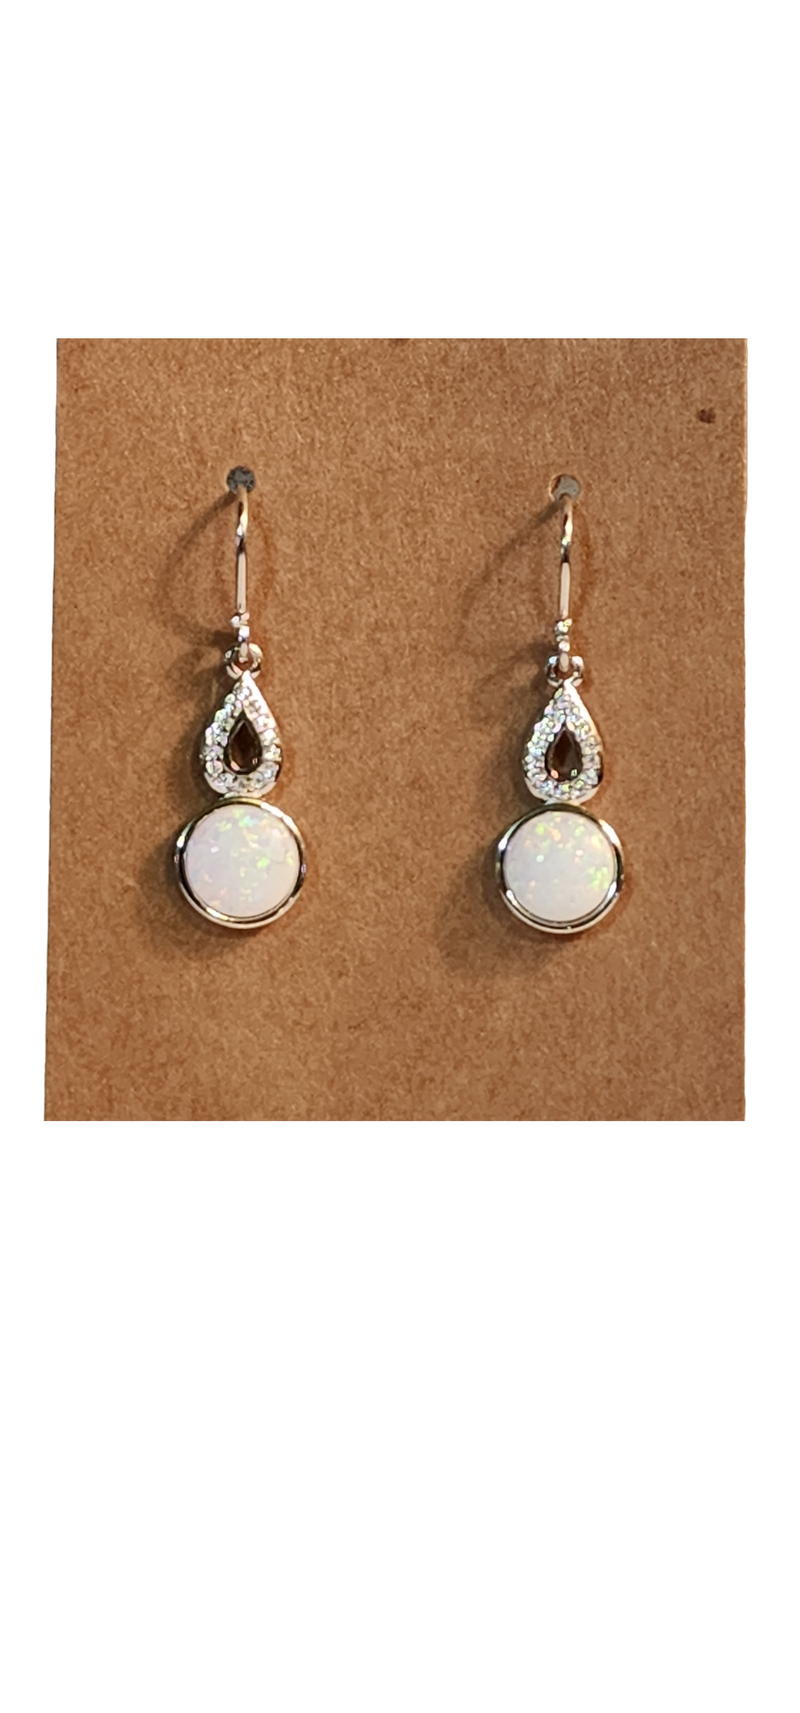 White Opal and CZ Earrings